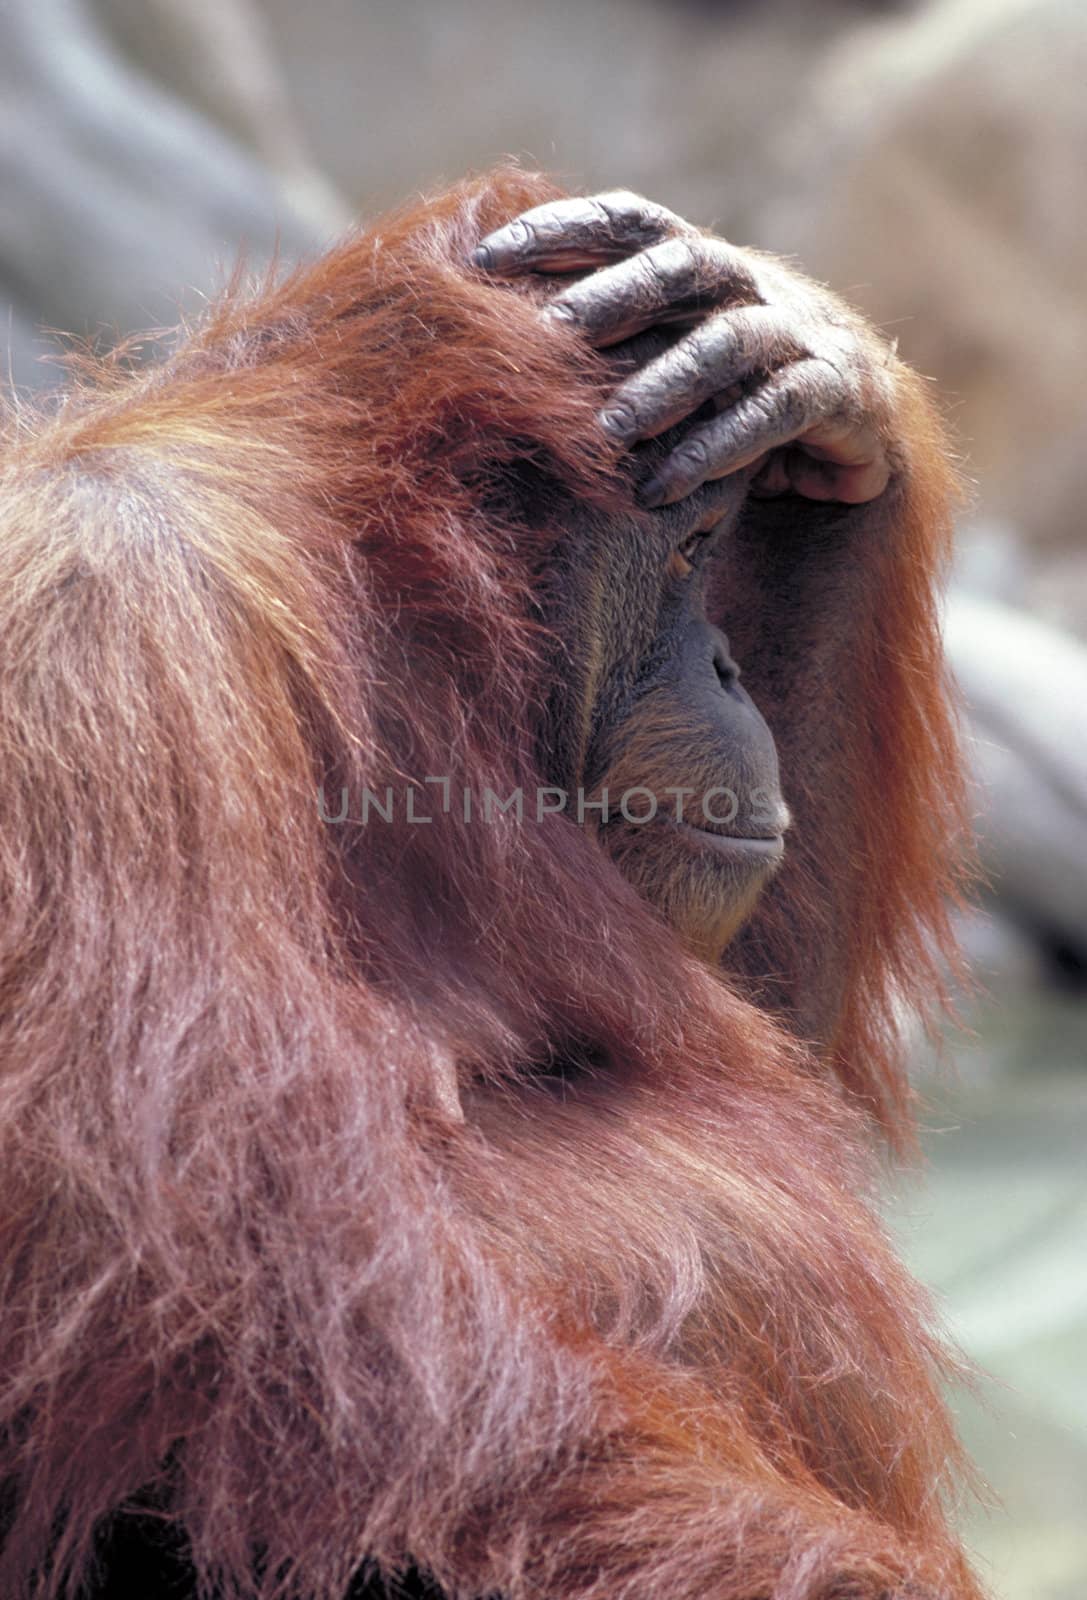 Orangutan by jol66